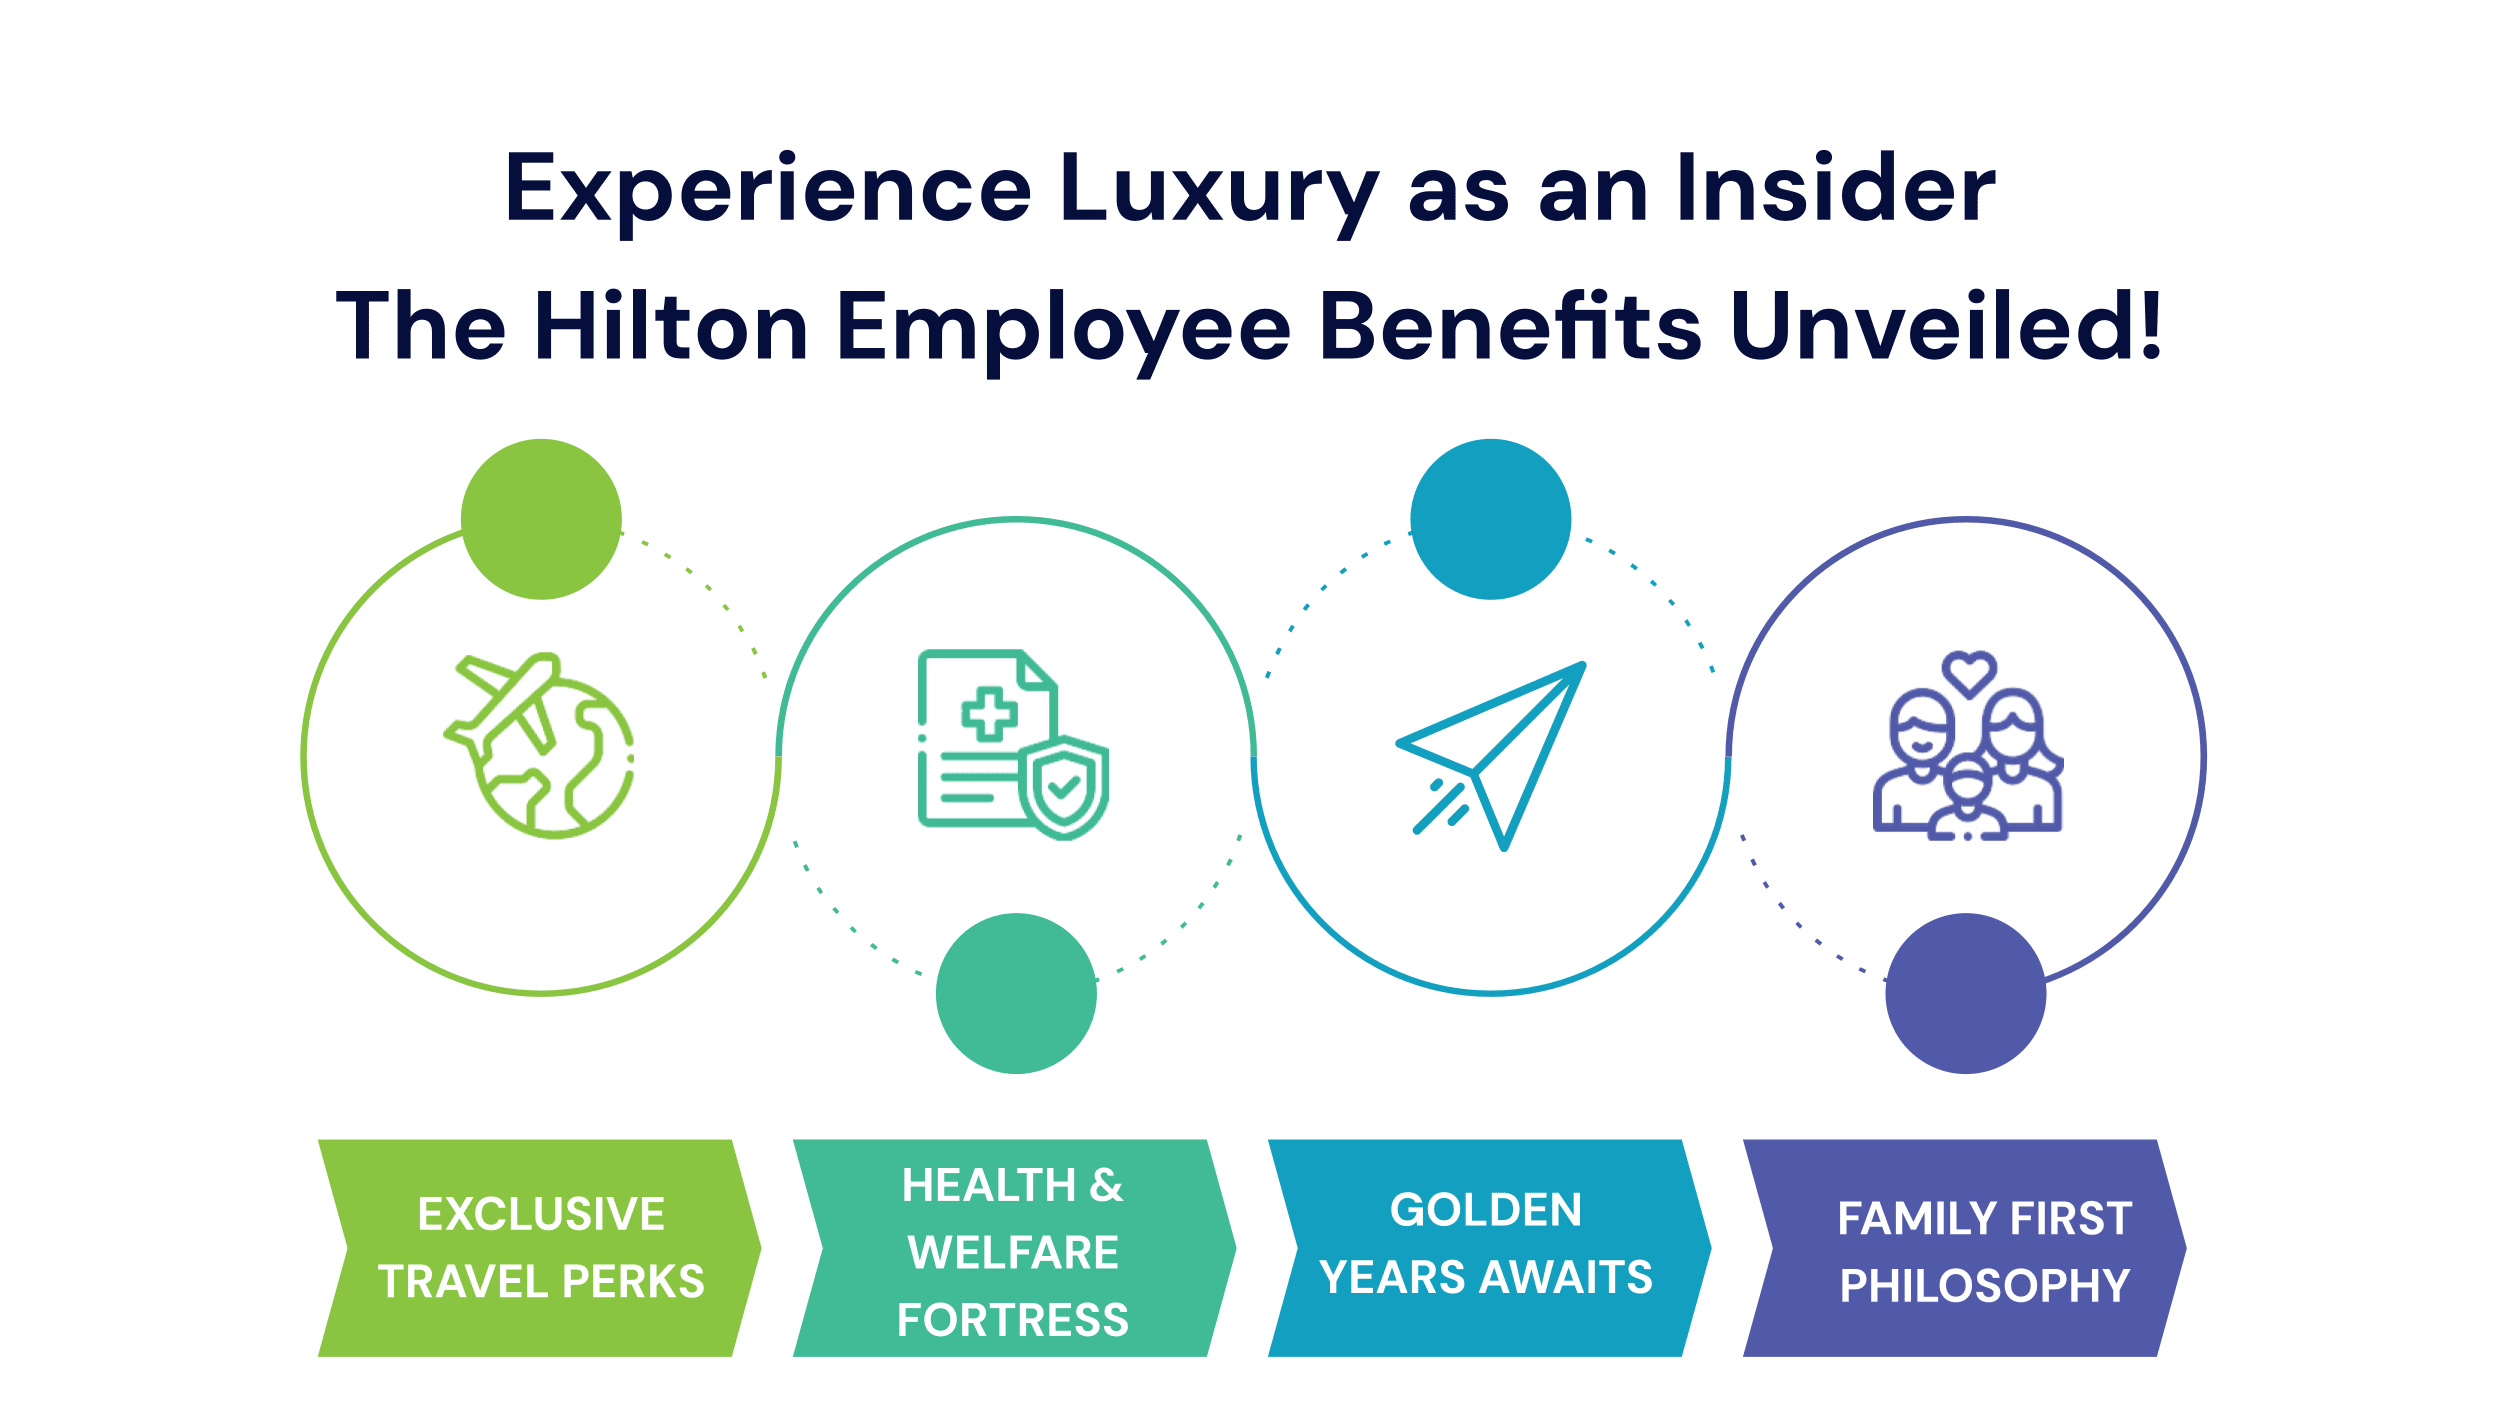 Hilton Employee Benefits and Perks